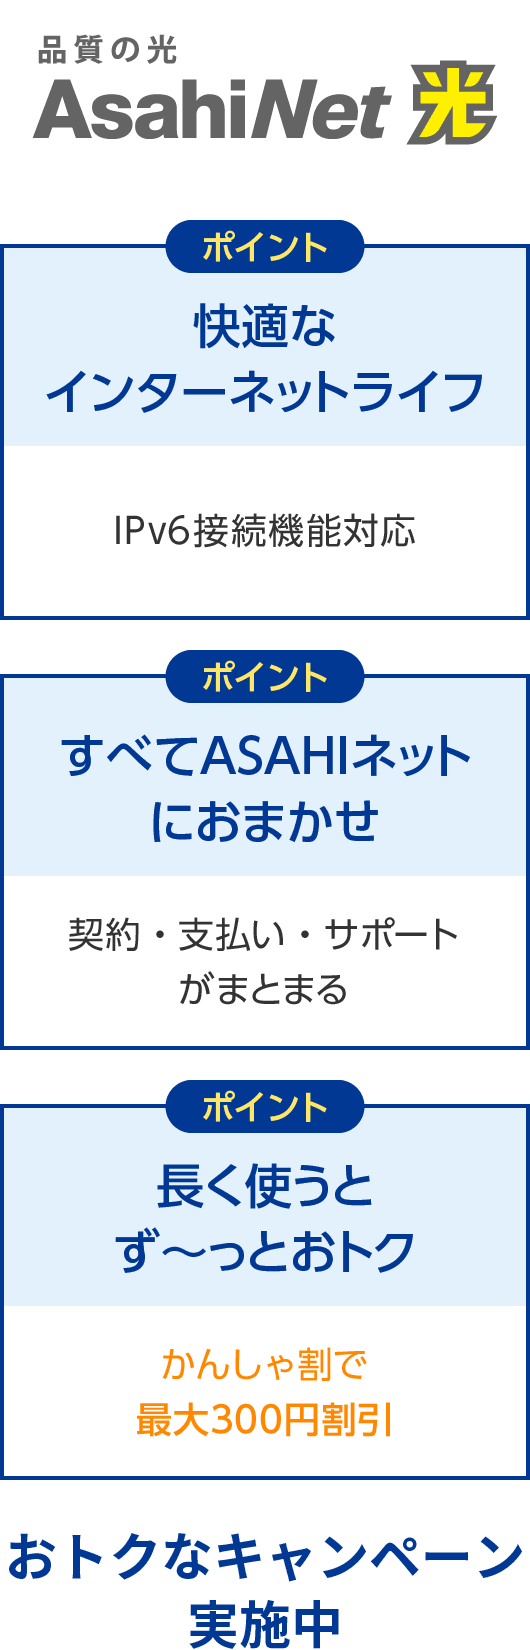 AsahiNet 光 快適なインターネットライフ・すべてASAHIネットにおまかせ・長く使うとず～っとおトク おトクなキャンペーン実施中